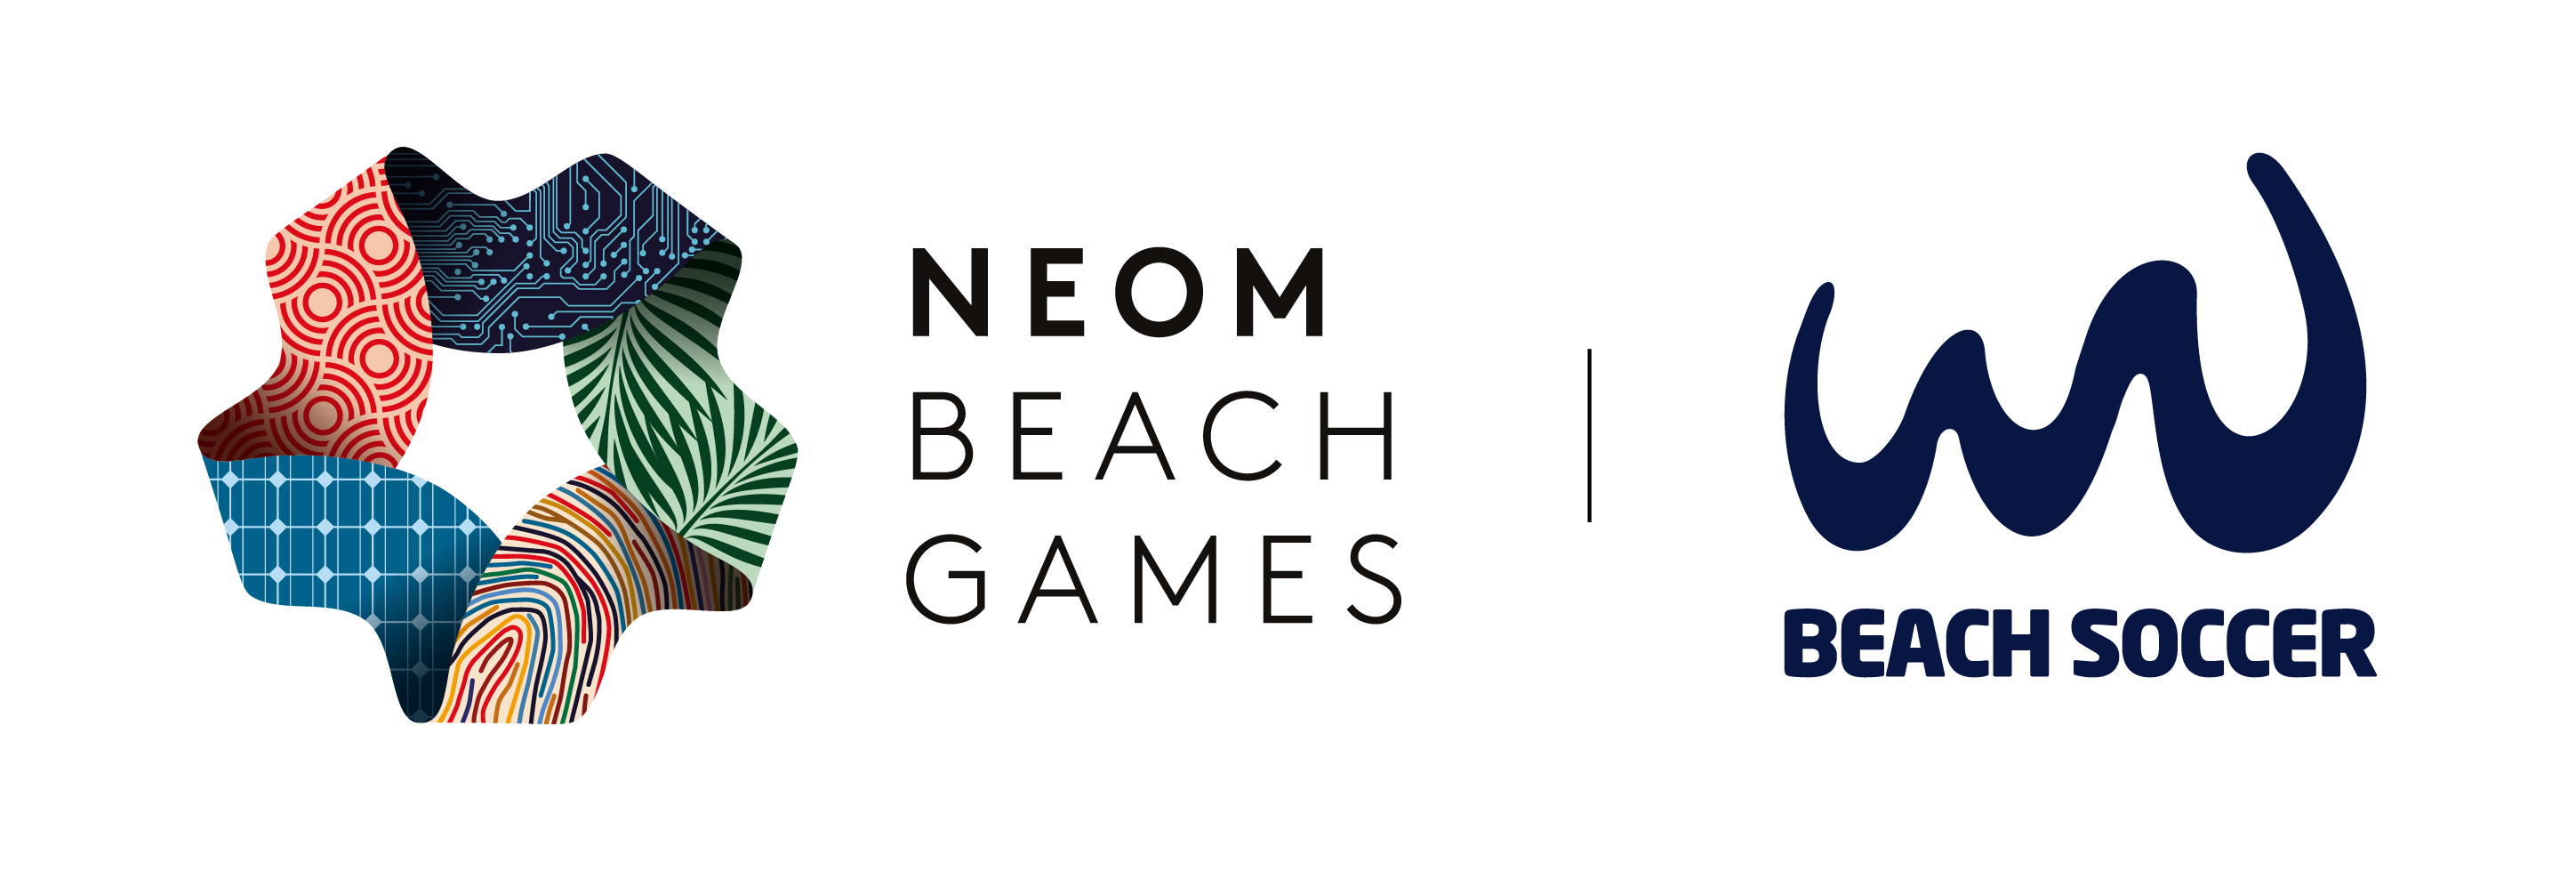 beach games including logo beach soccer